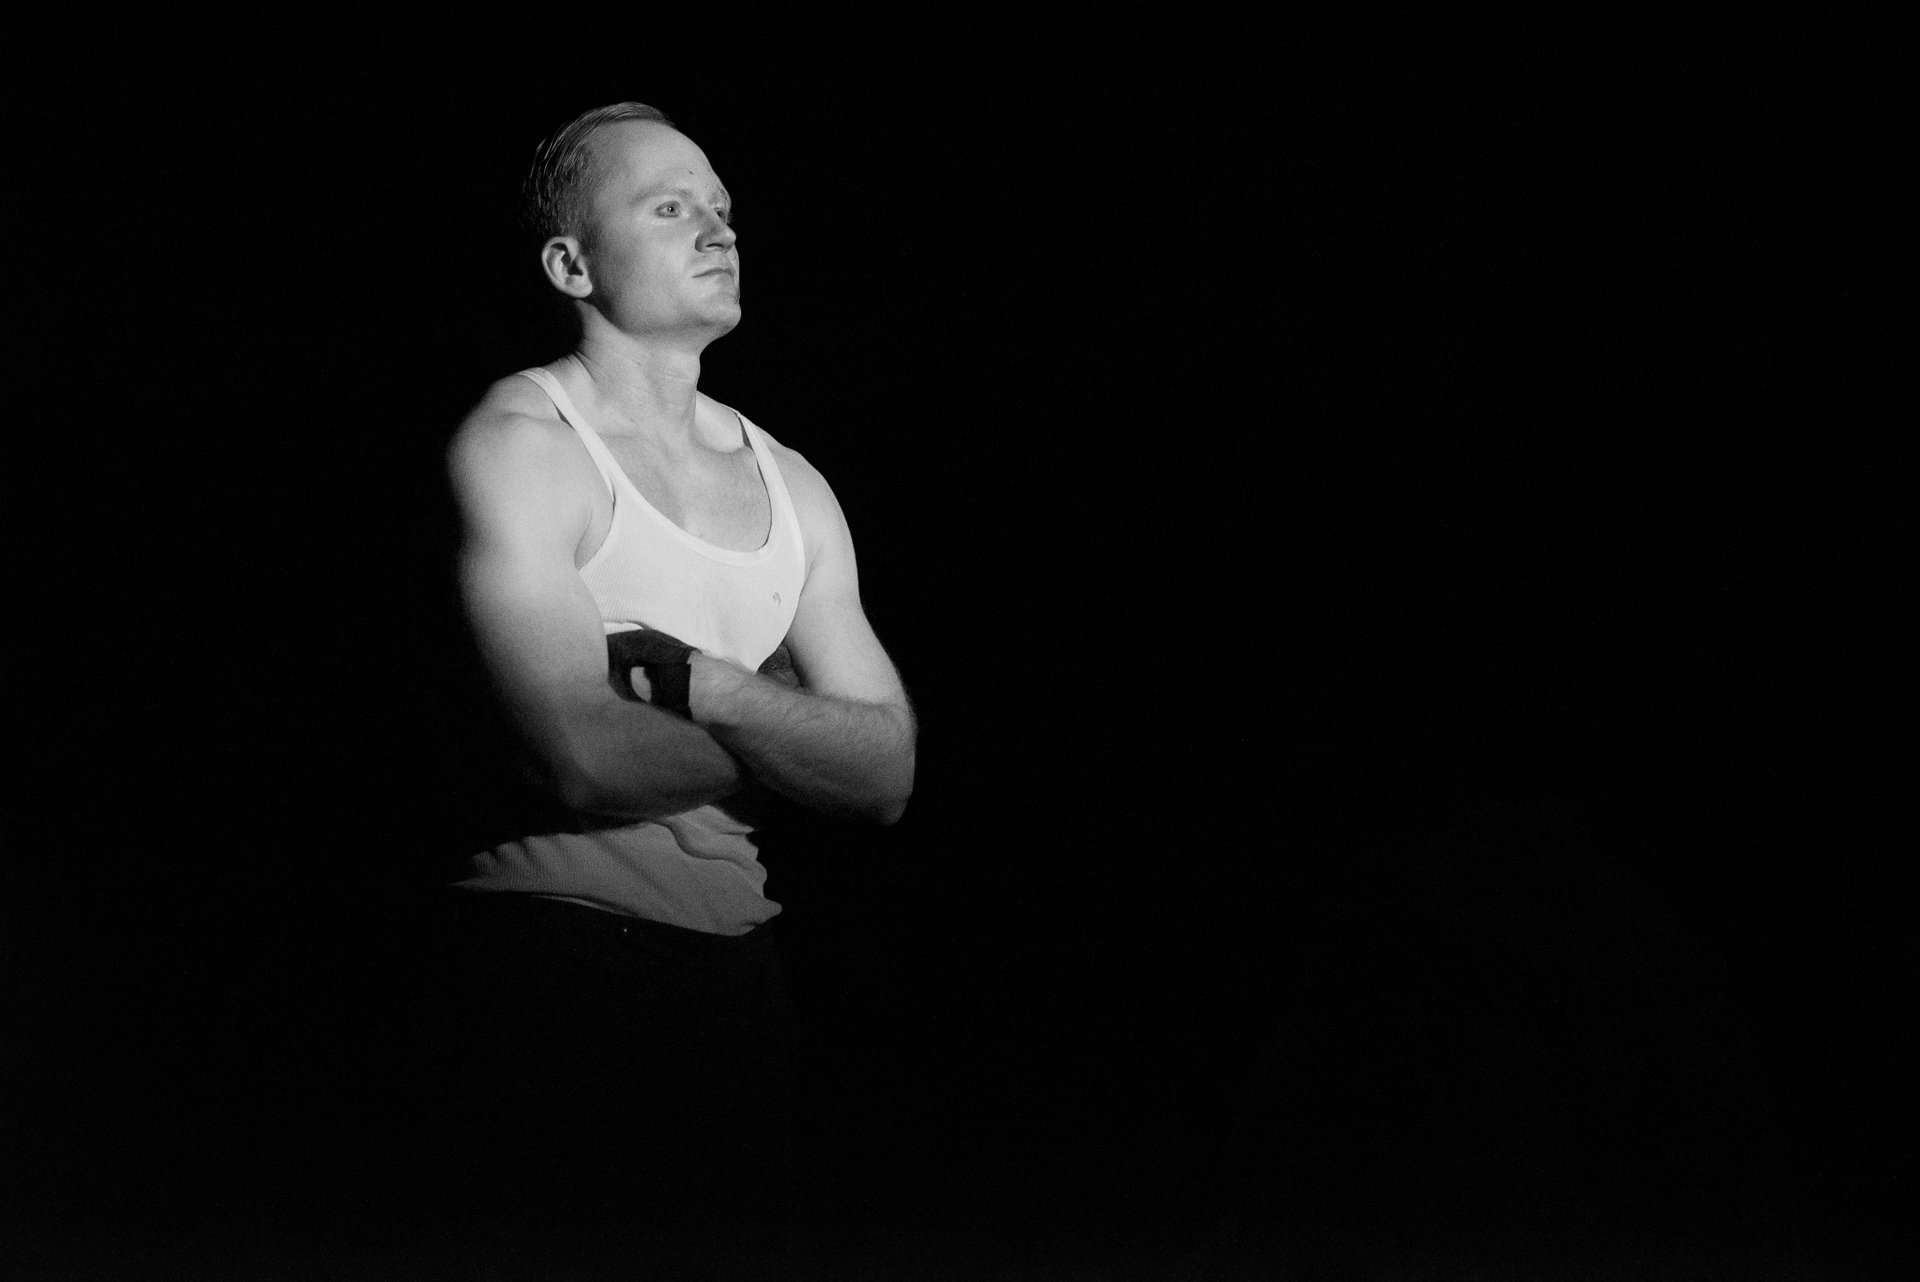 A brooding Zdeny onstage in "Pérák" (Outlaw).